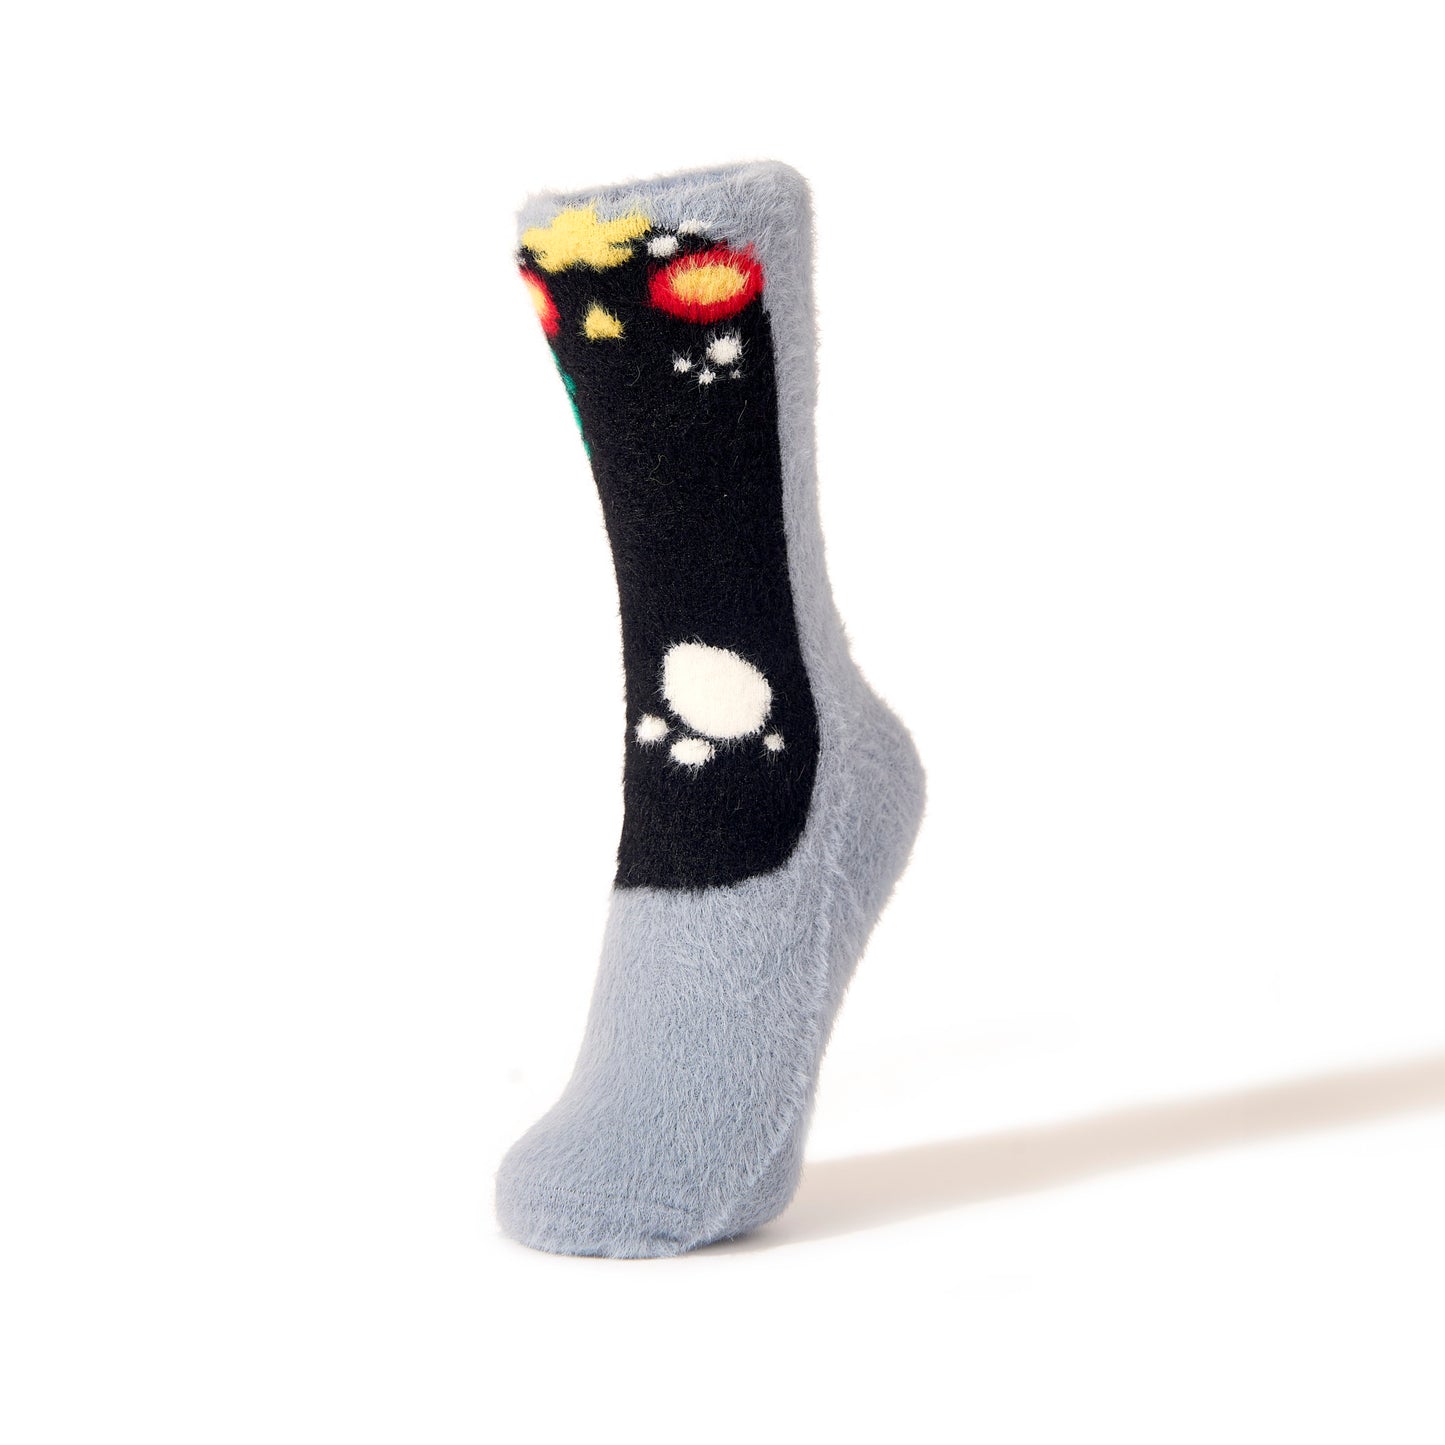 Tiny Protectors Fuzzy Sock 3-Pack (Moss, Gloom Spirit, Valentine)